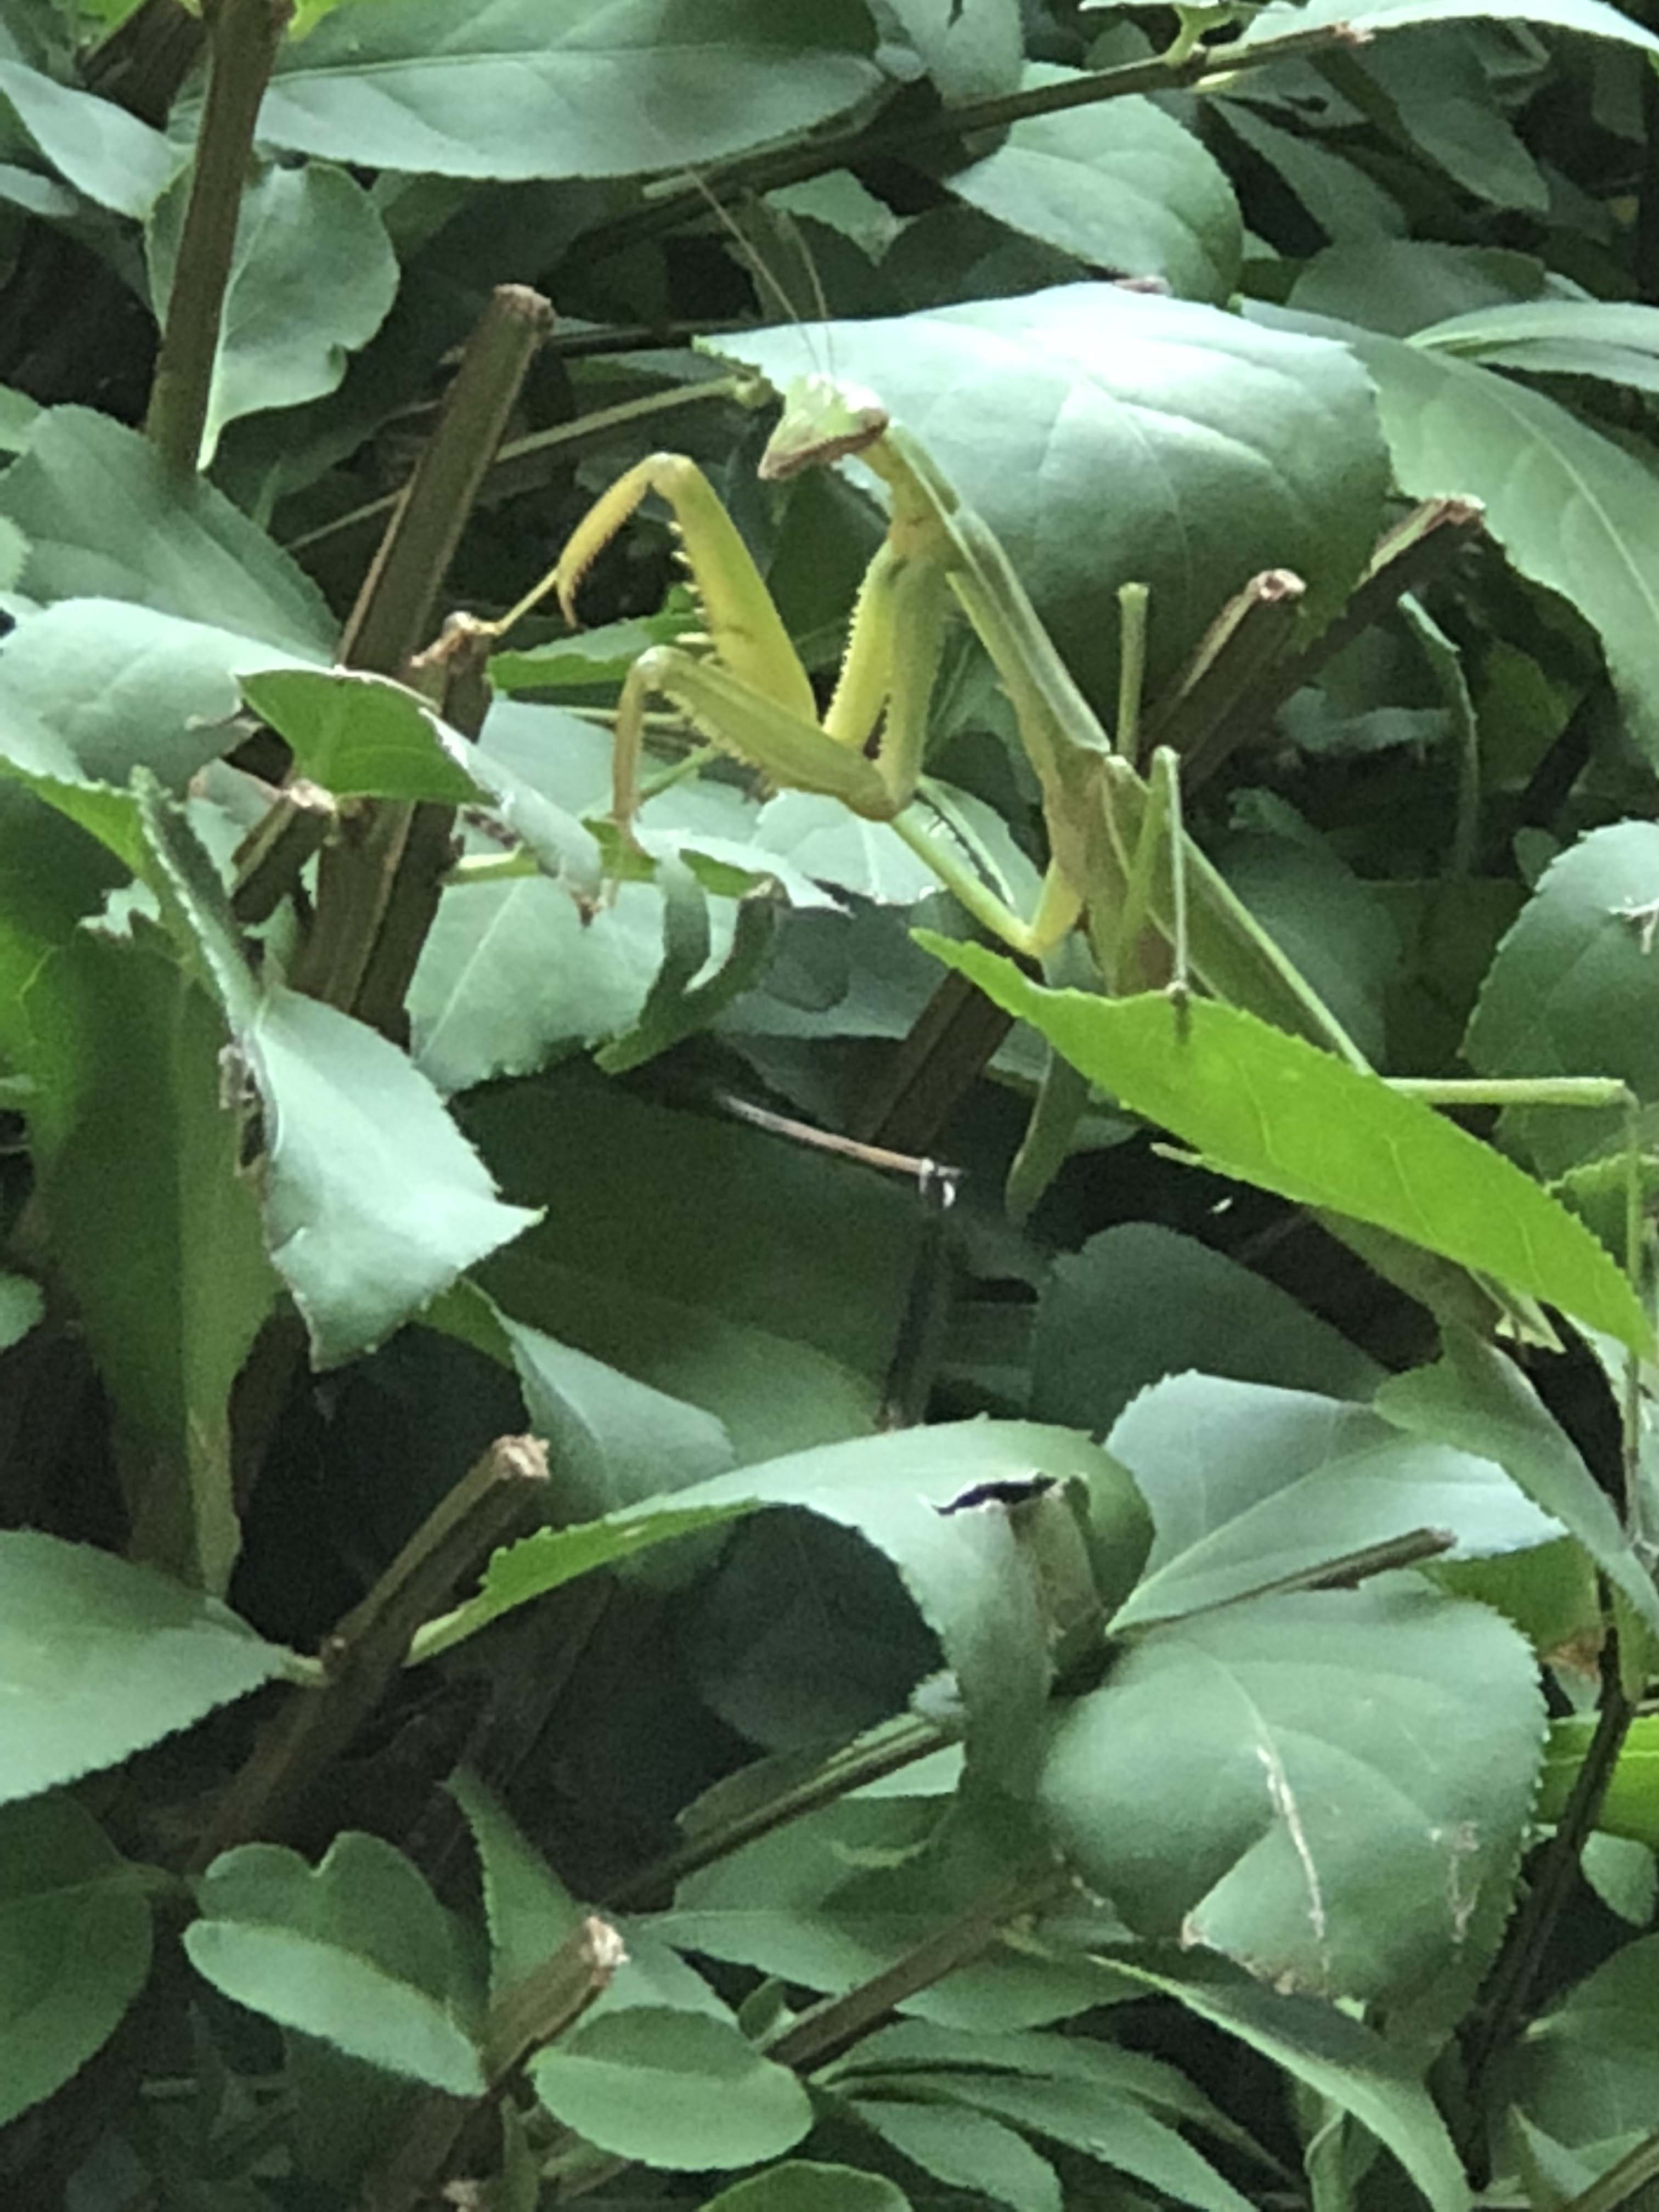 a preying mantis on a bush